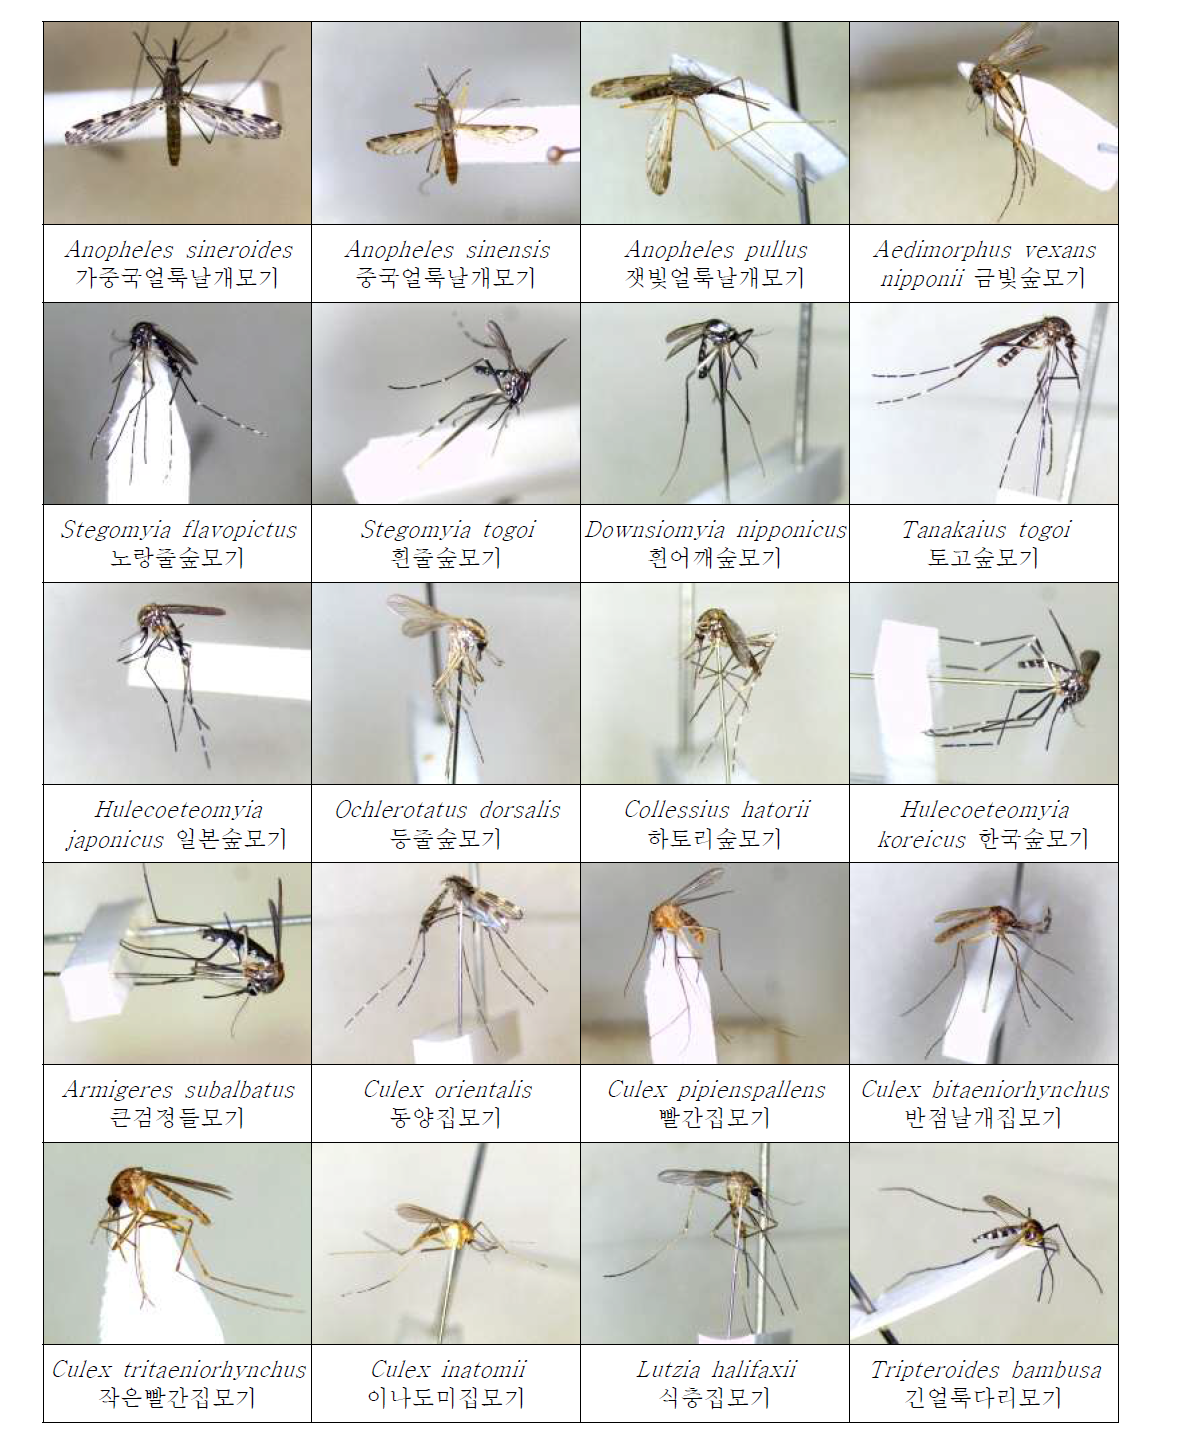 Photos of 20 mosquito species collected in Korea.